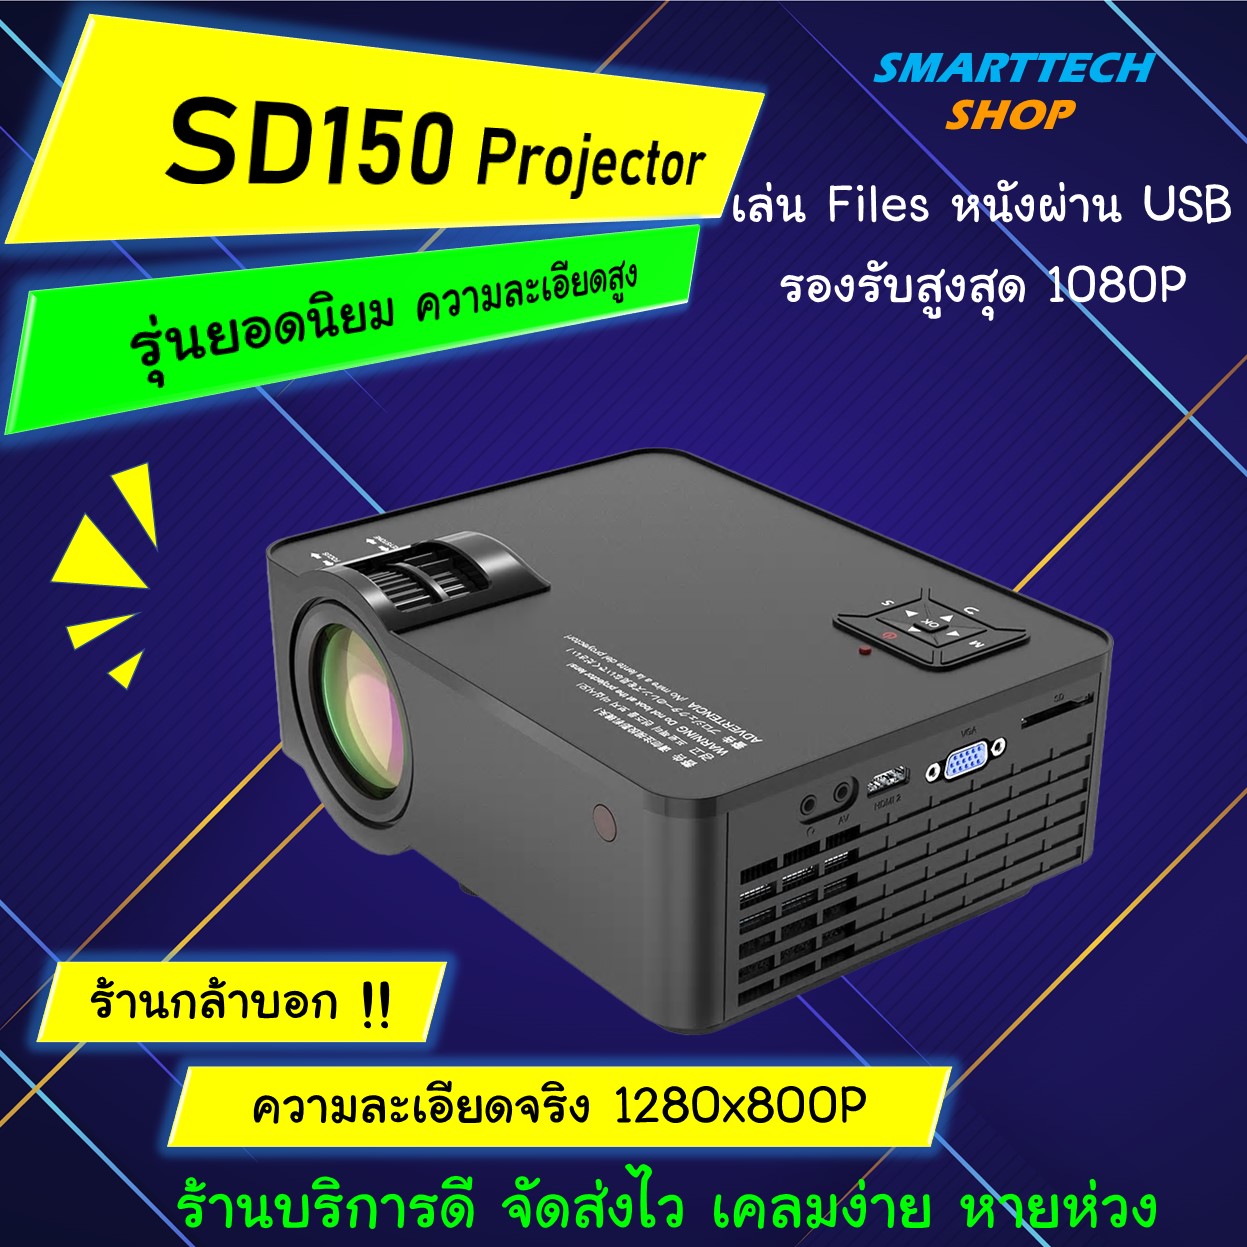 Mini Projector SD150 ราคาถูกที่สุด ในระดับความระเอียดจริง 720P  รุ่นใหม่ล่าสุด 2020